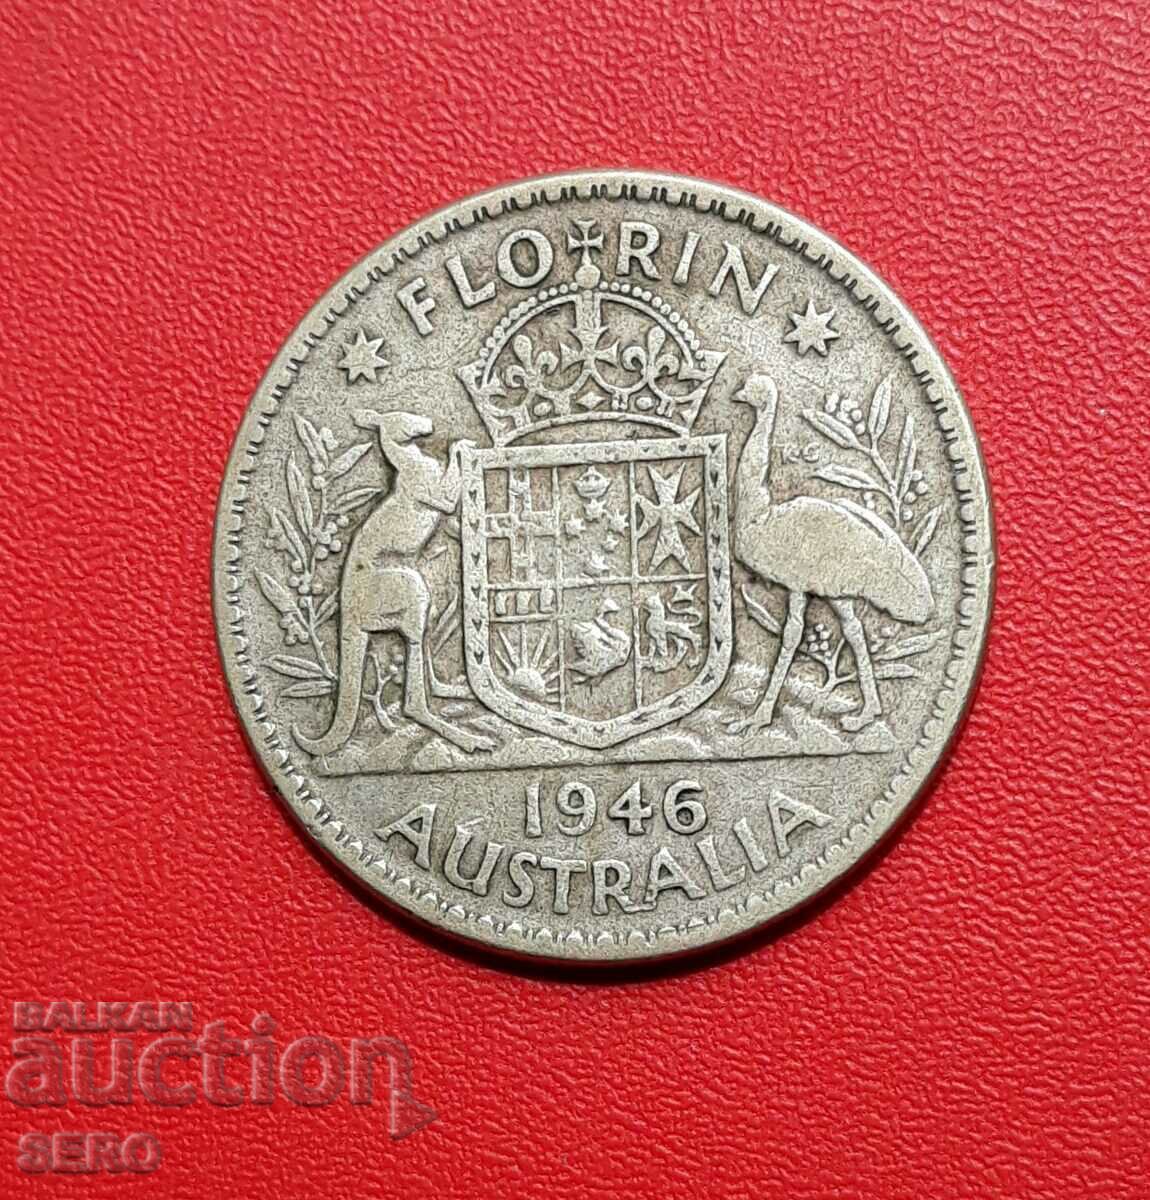 Australia-1 florin 1946